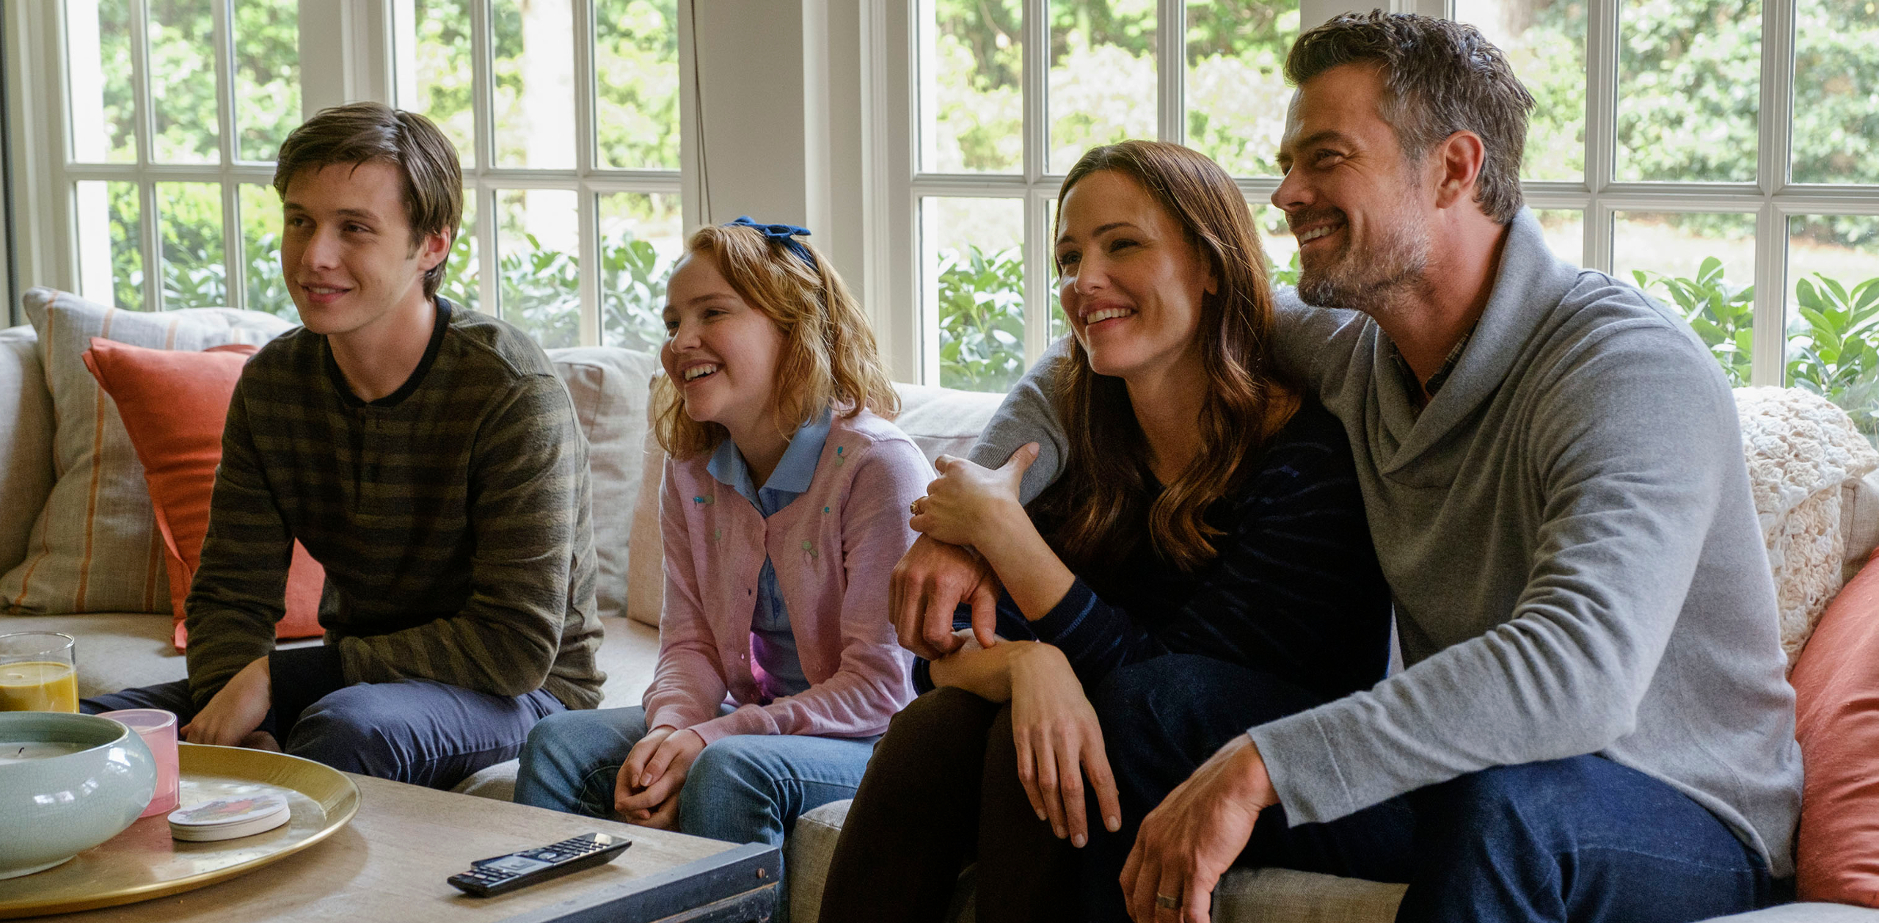 Nick Robinson (Simon), Talitha Bateman (Nora), Jennifer Garner (Emily), and Josh Duhamel (Jack) star in Twentieth Century Fox’s LOVE, SIMON